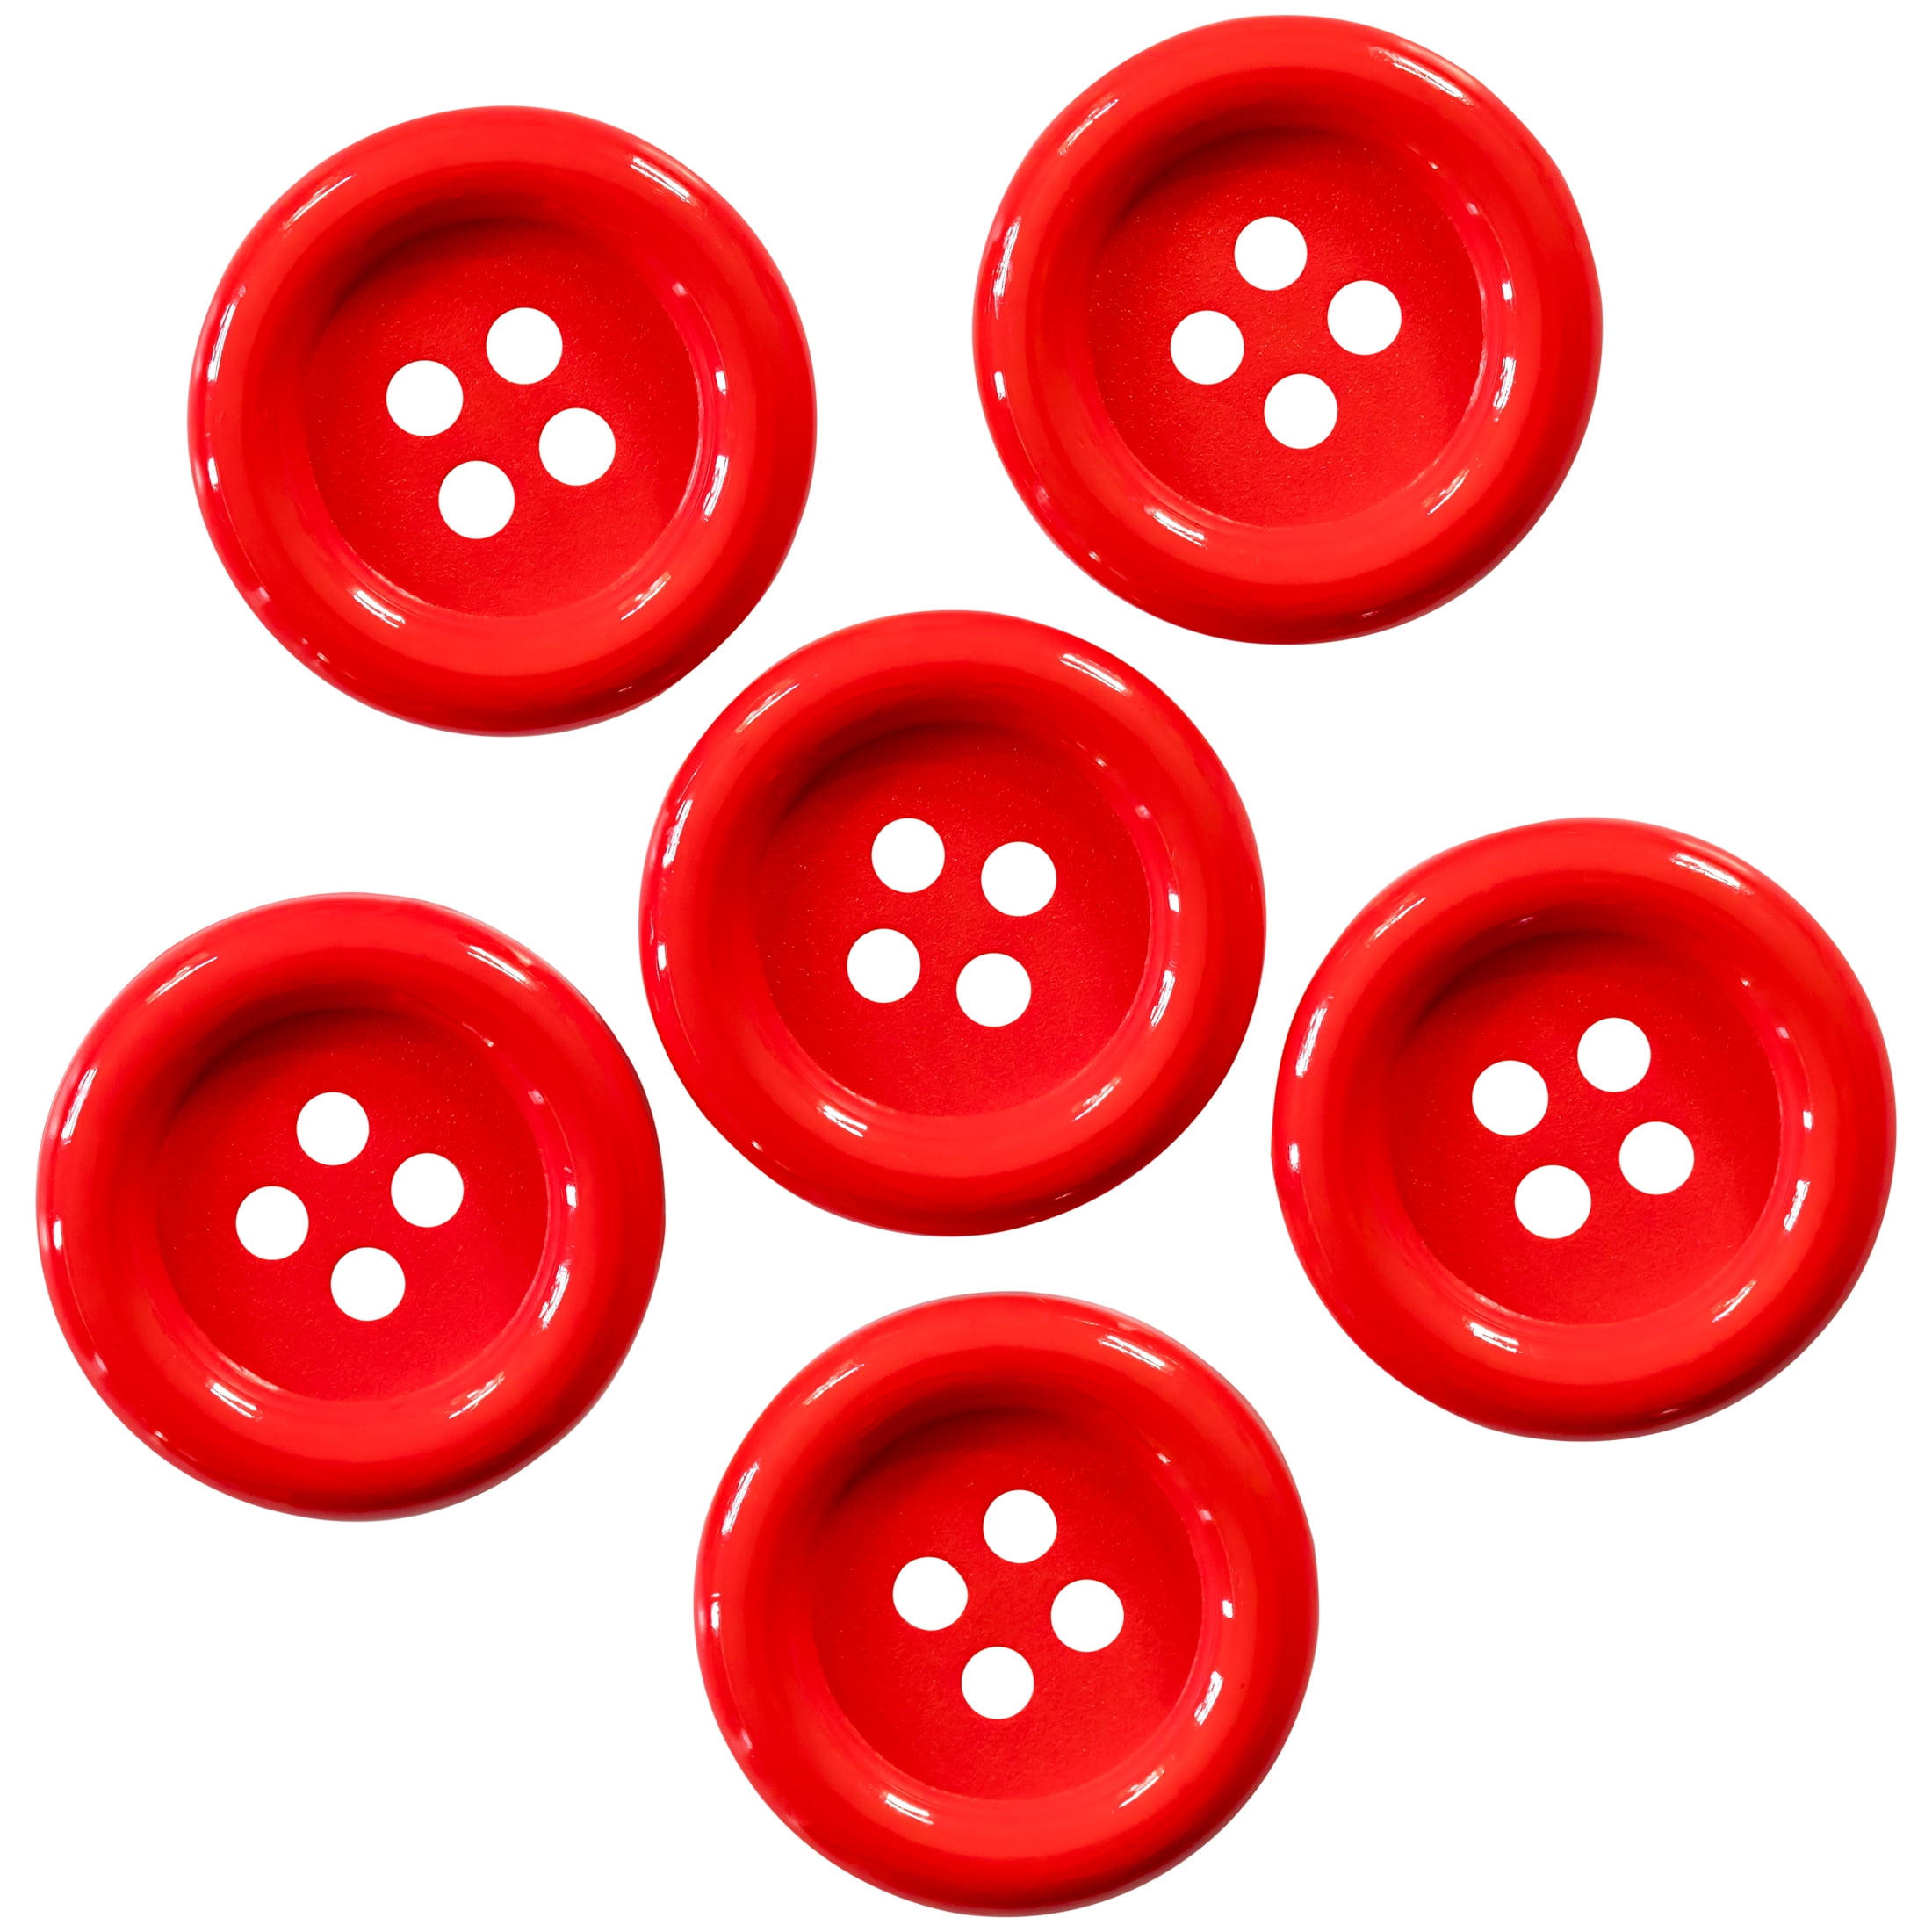 3/4 Bulk Red Buttons 18mm Red Plastic Buttons Bulk Red Buttons Wholesale  Buttons 3 4 Inch Red Buttons Button Lot 